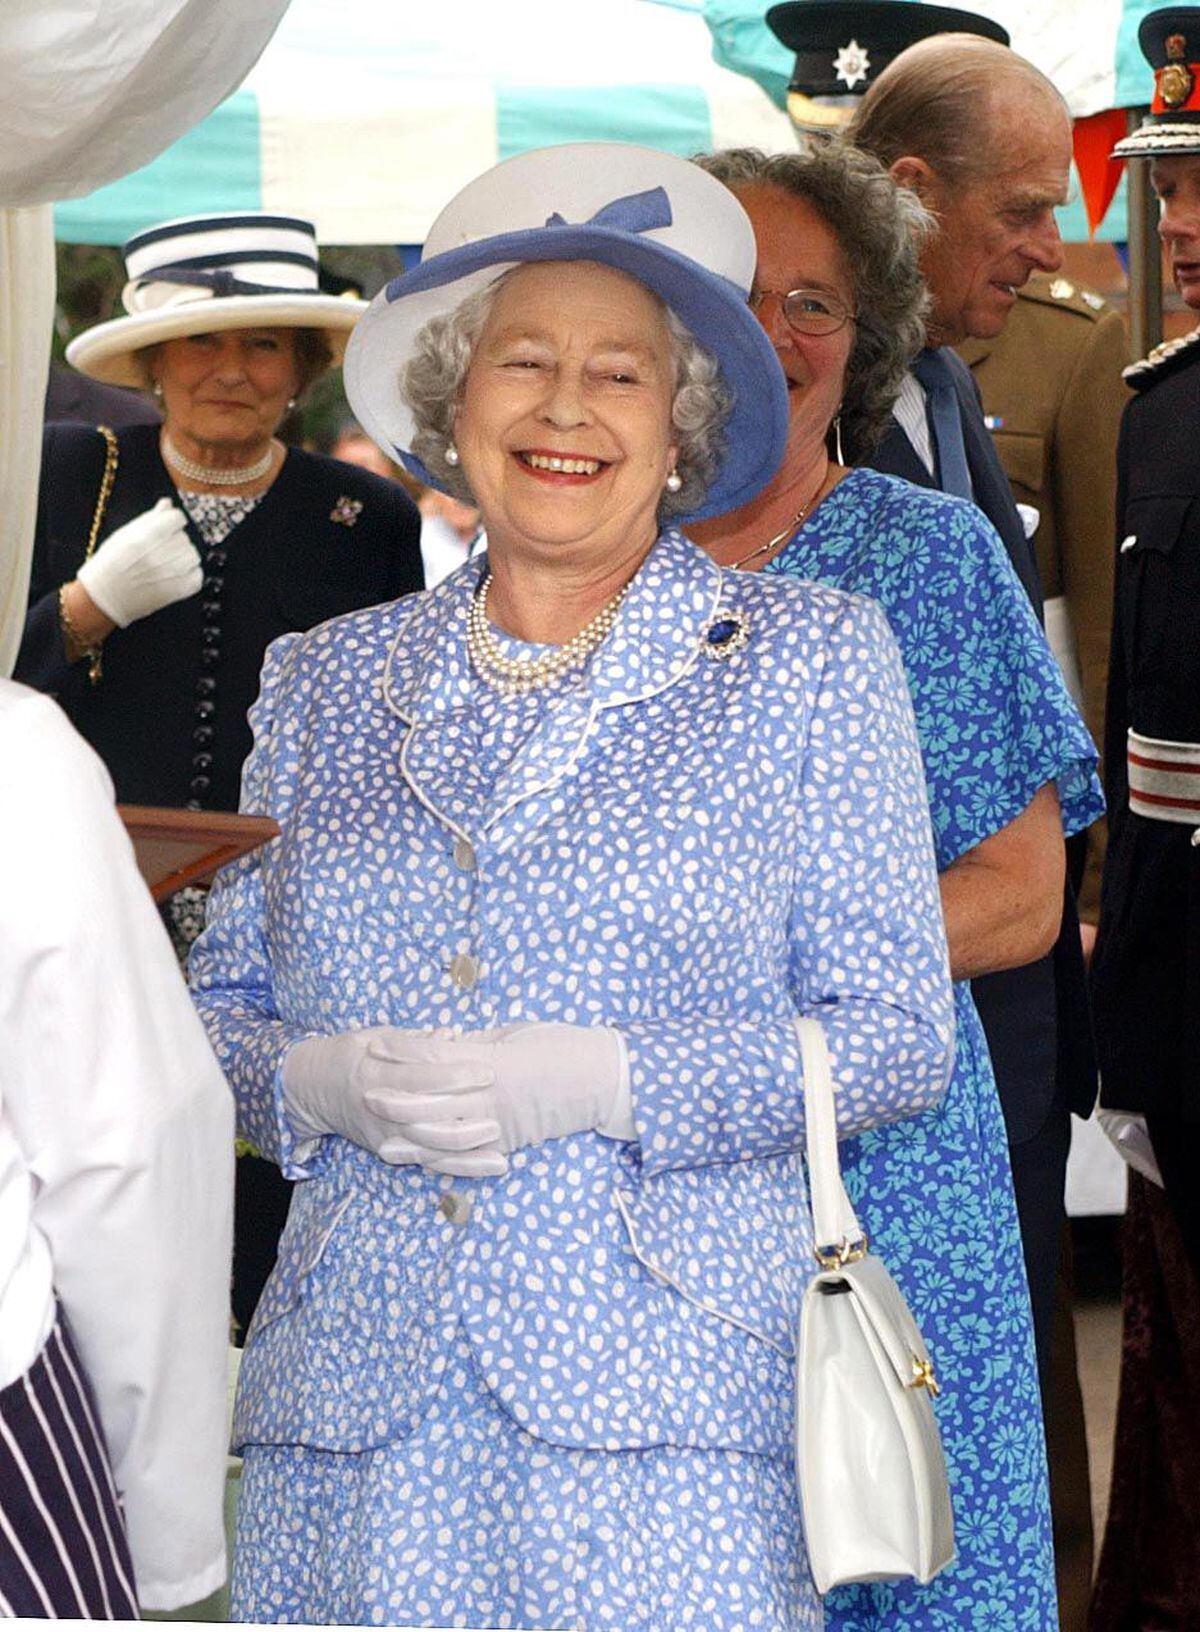 Queen Elizabeth II enjoying a joke during a visit to Ludlow Market